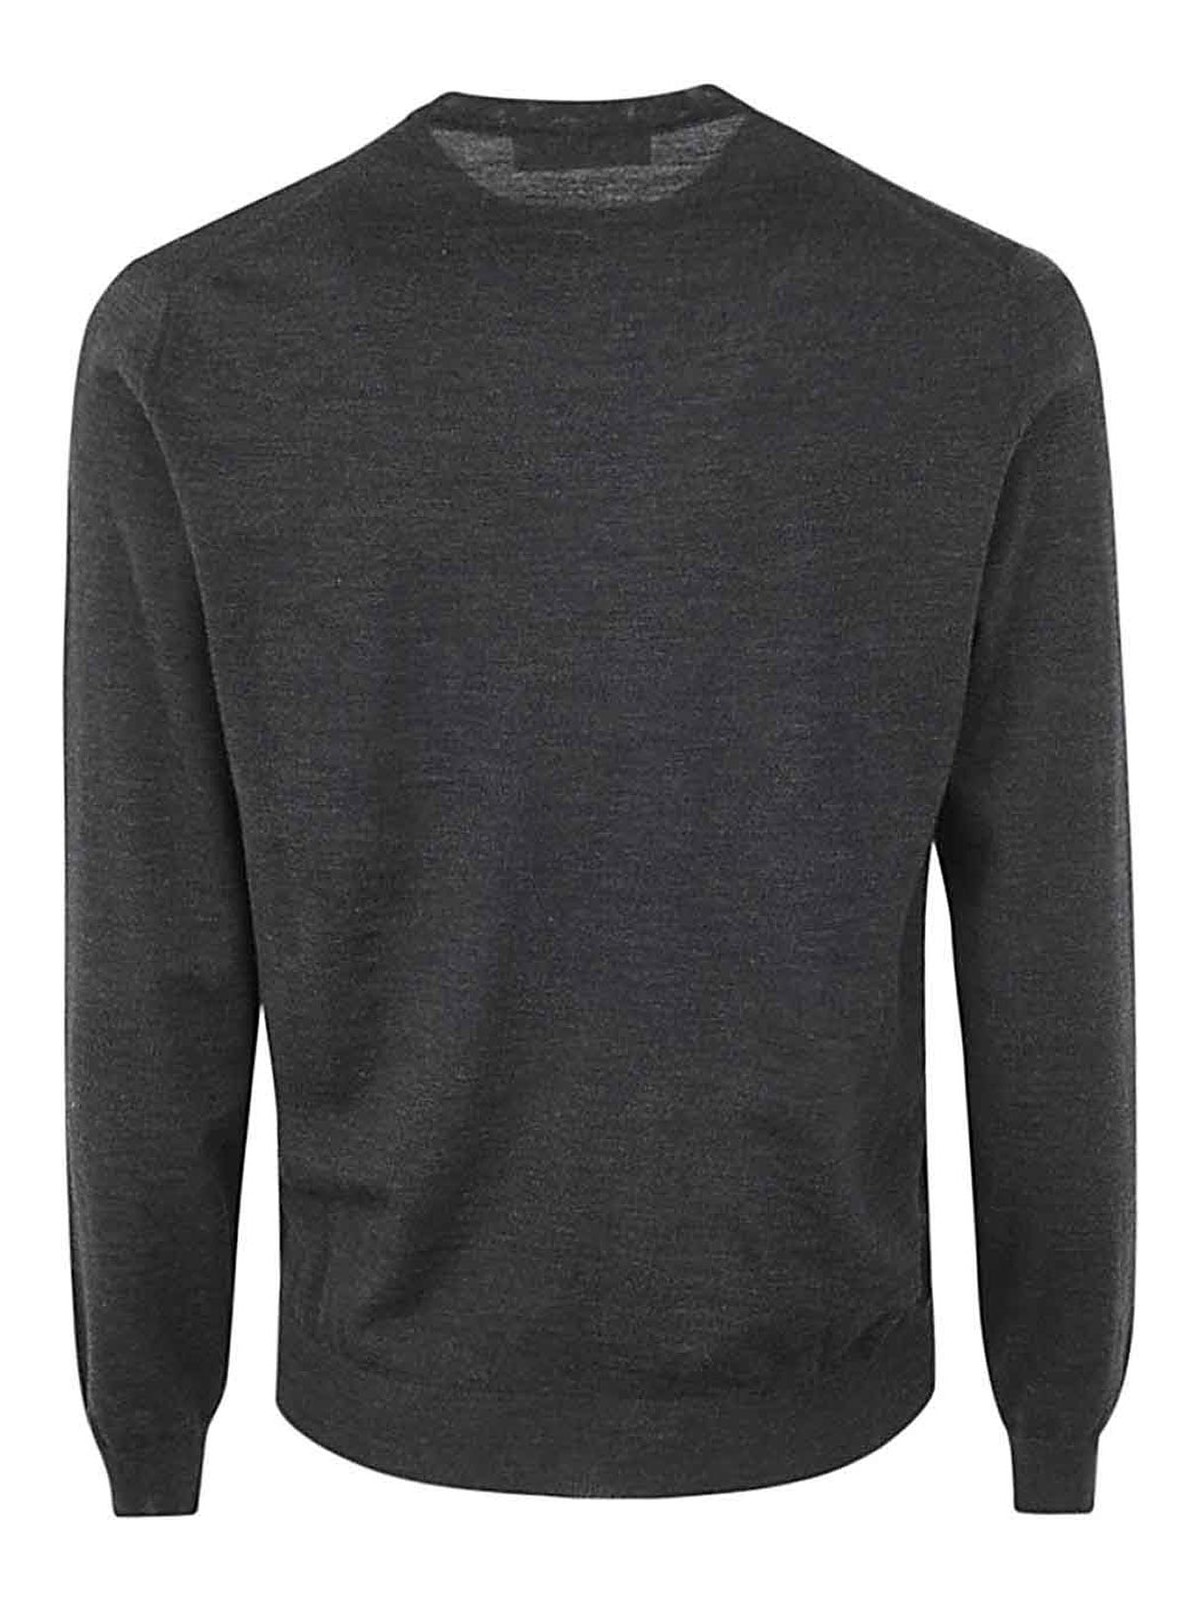 Shop Filippo De Laurentiis Royal Merino Long Sleeves Crew Neck Sweater In Grey